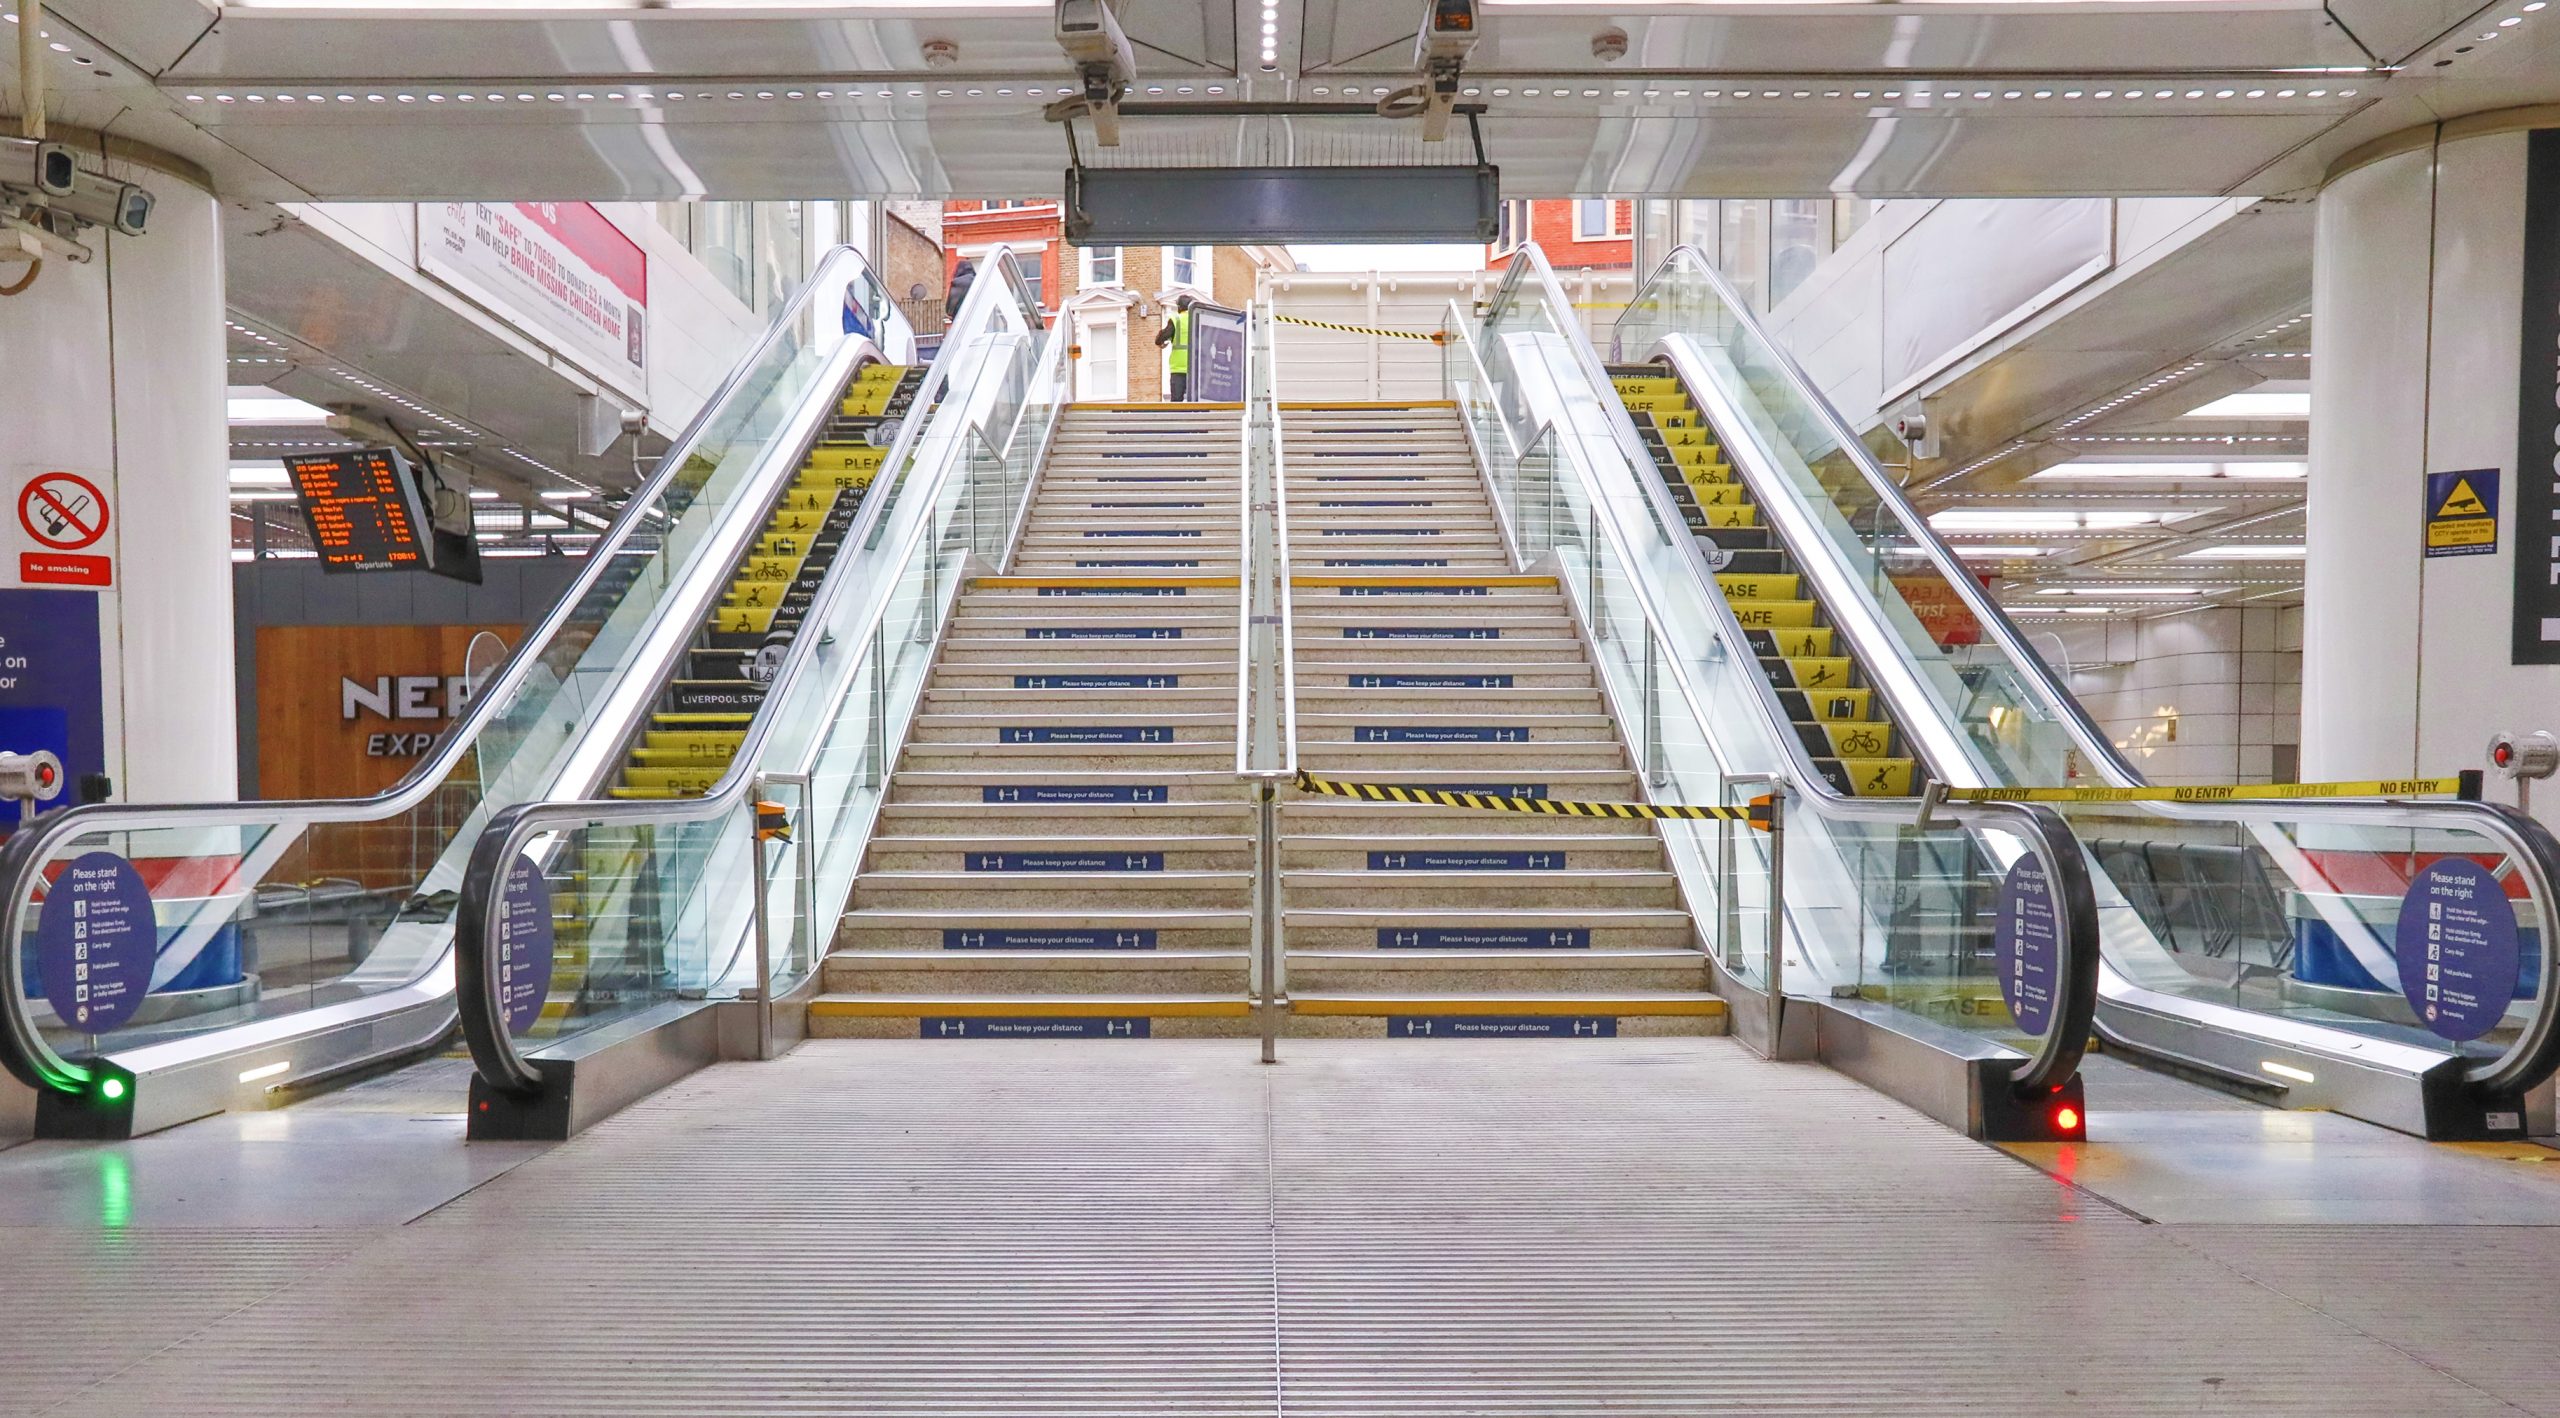 Network Rail Liverpool Street Station London - Escalator Advertising